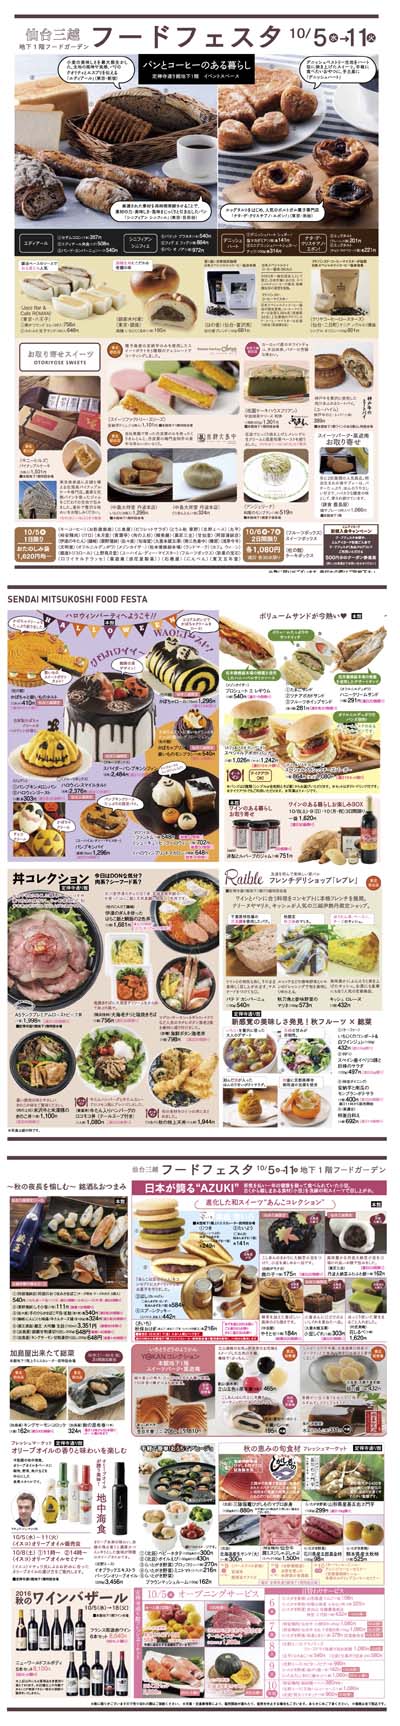 sendai_foodfesta2016d.jpg